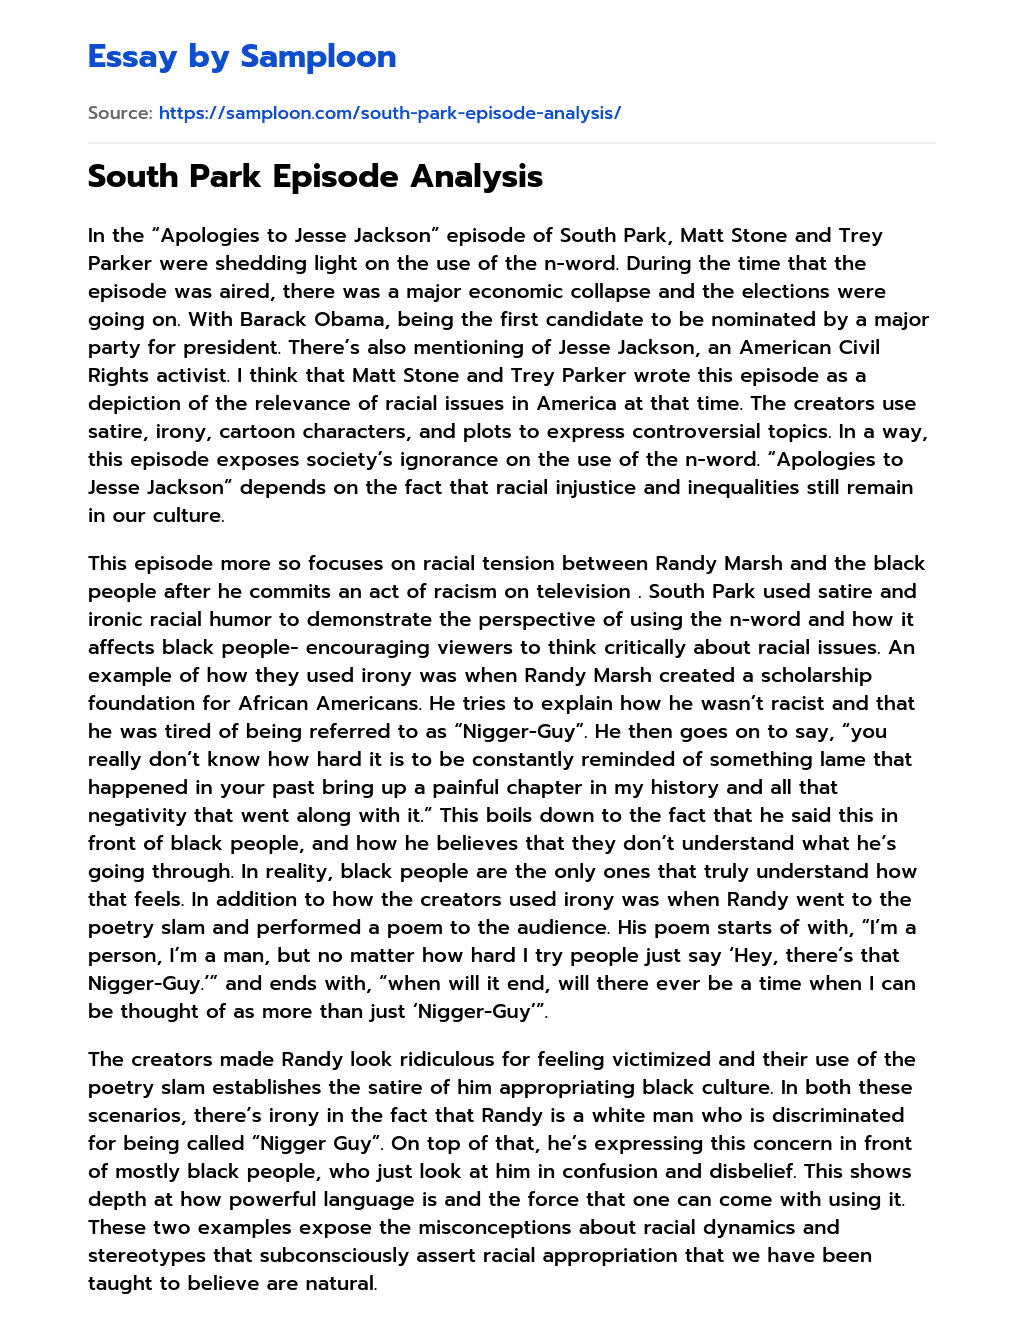 South Park Episode Analysis essay